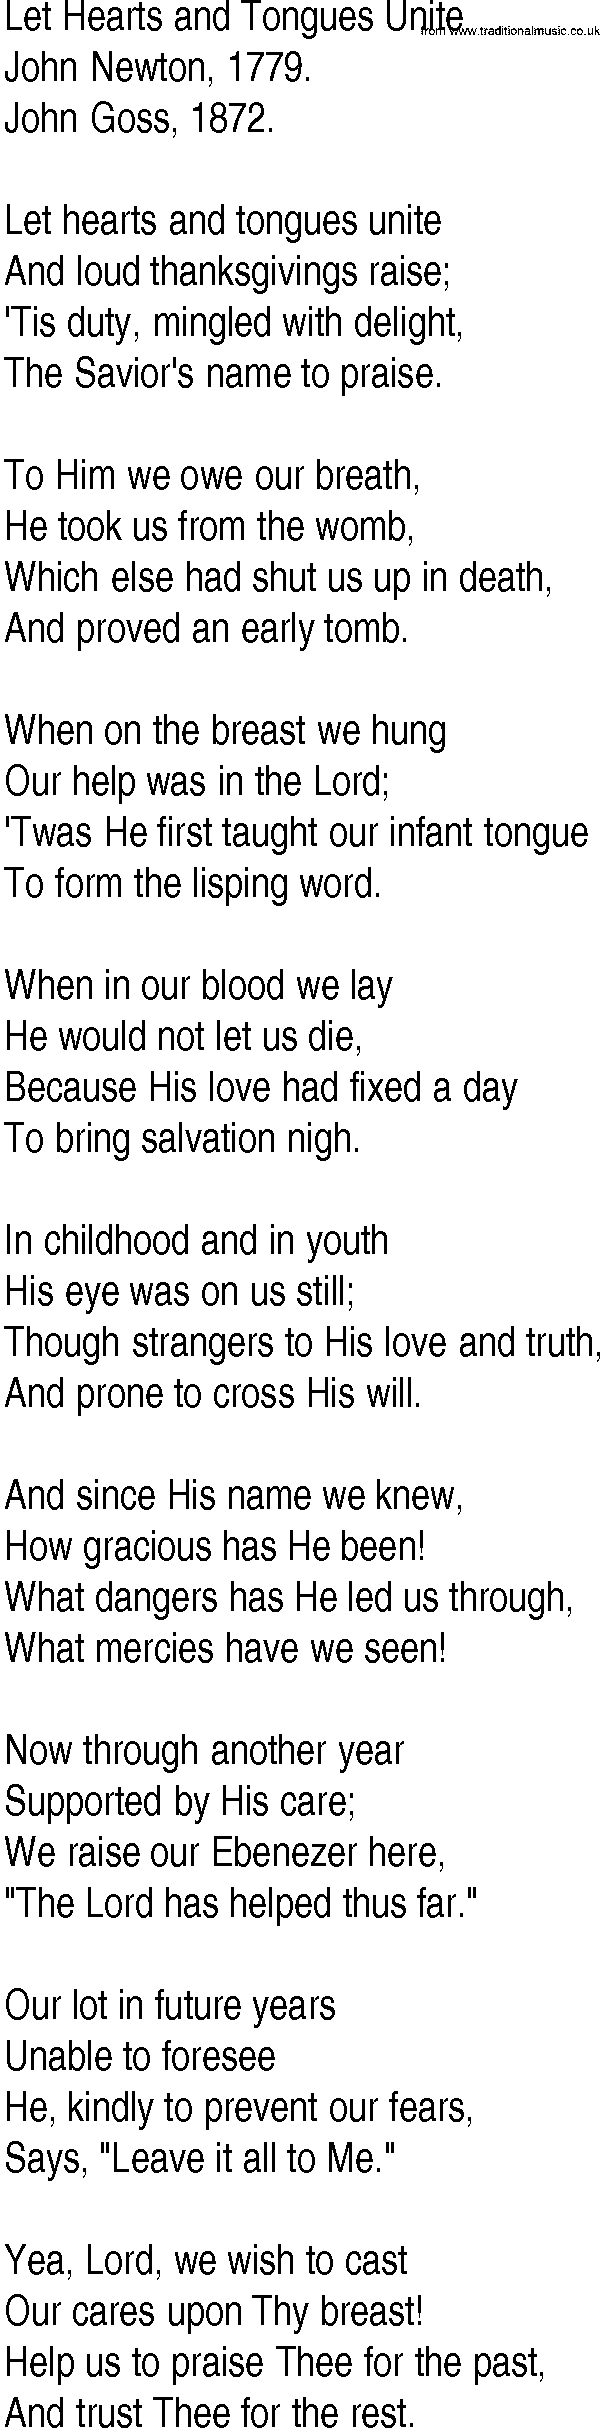 Hymn and Gospel Song: Let Hearts and Tongues Unite by John Newton lyrics